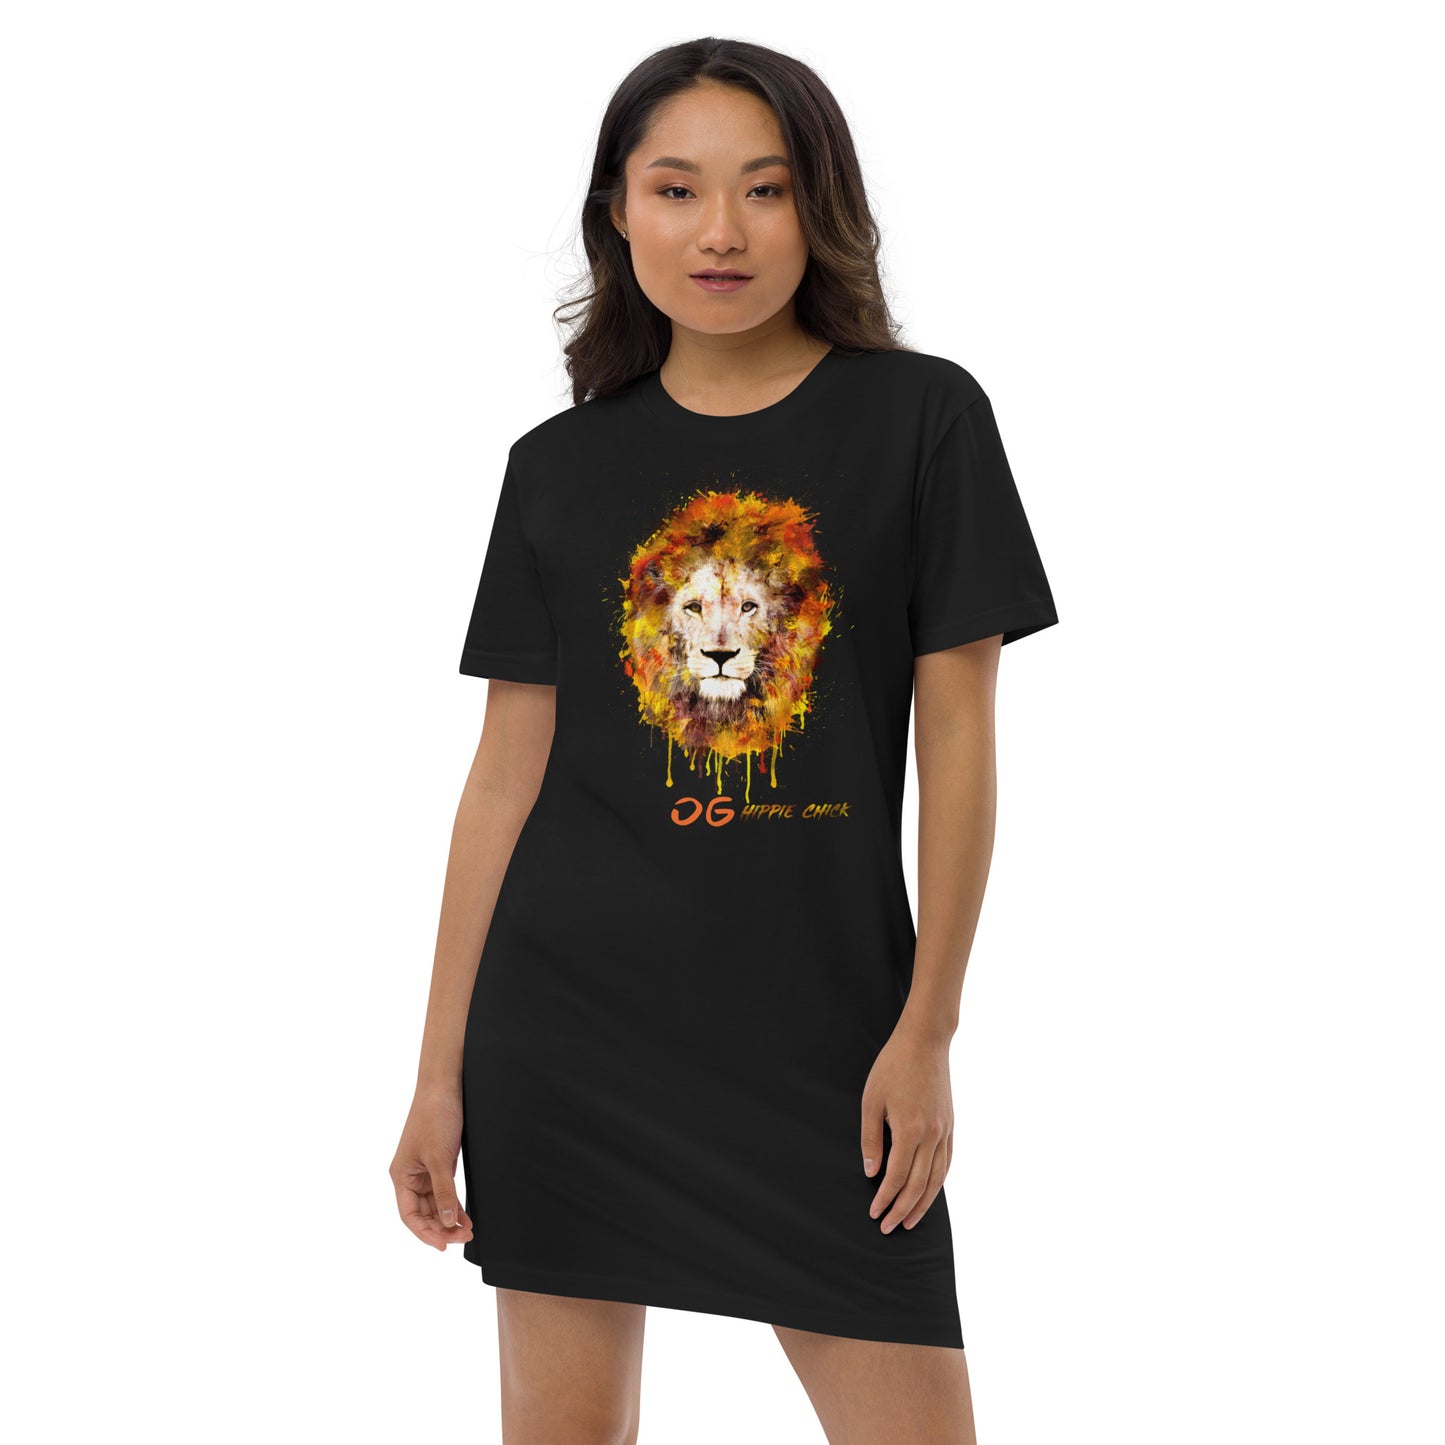 T-shirt Dress (Lion front)